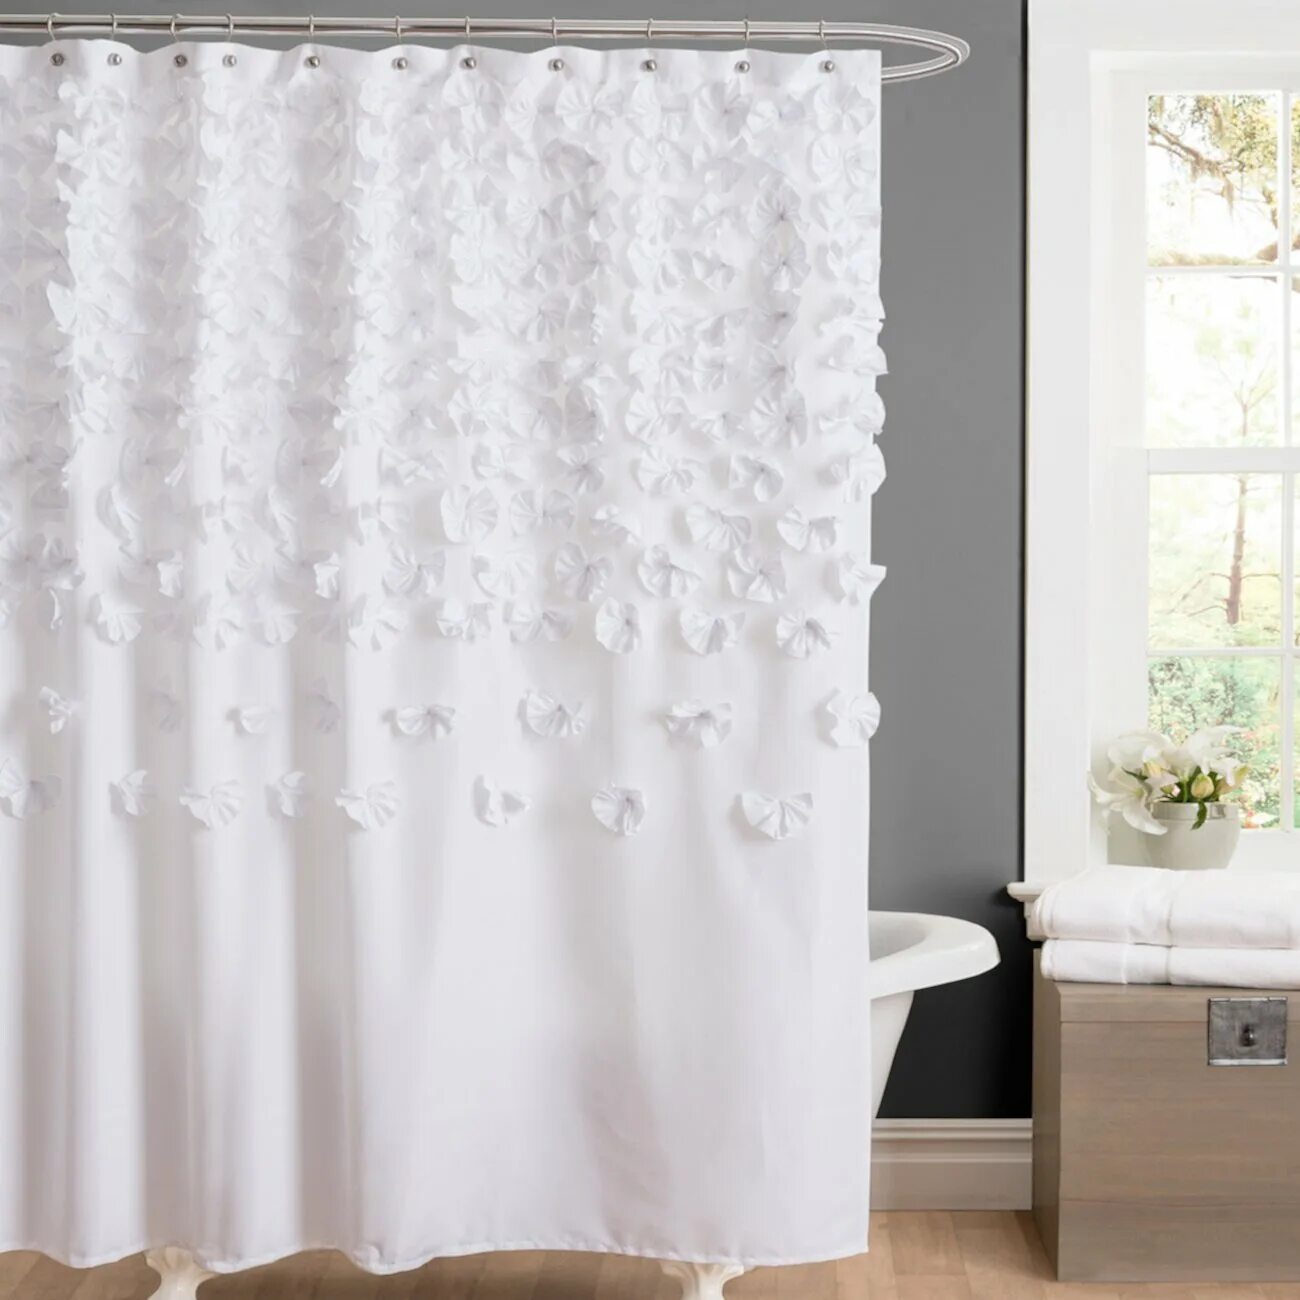 Штора для ванной Curtain MC-1804073. Штора Fabric Shower Curtain. Шторка для душа Shower Curtain f-b20y. Шторка для ванной d24p218i11. Занавеска для ванной тканевая